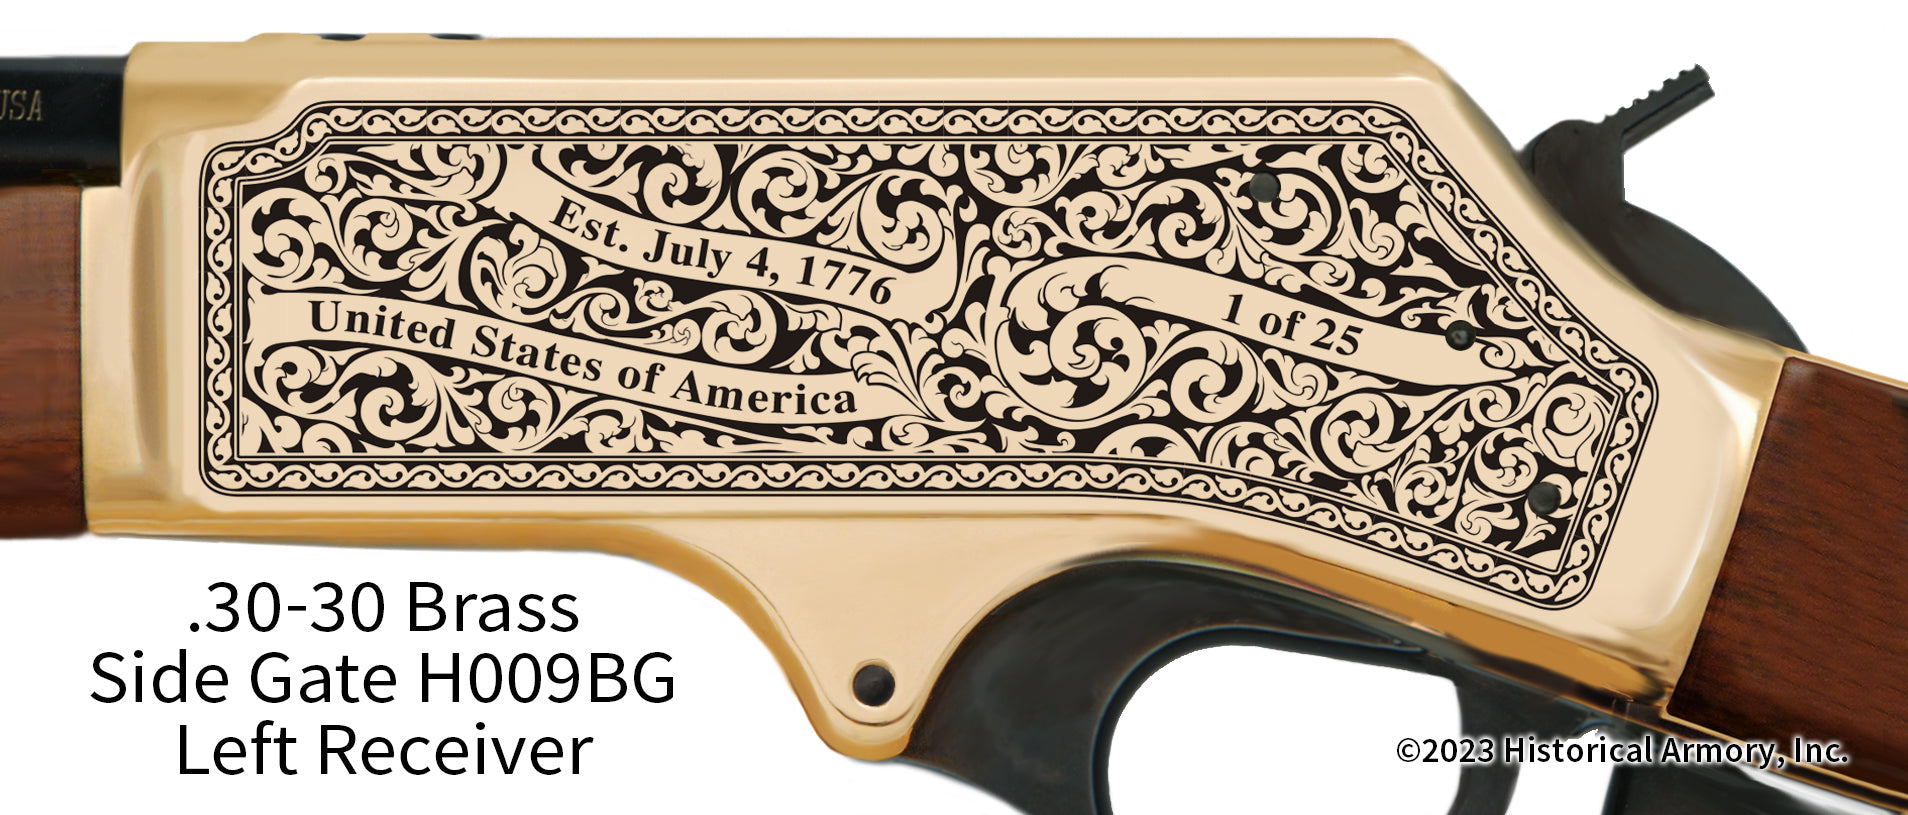 Cass County North Dakota Engraved Henry .30-30 Brass Side Gate Rifle